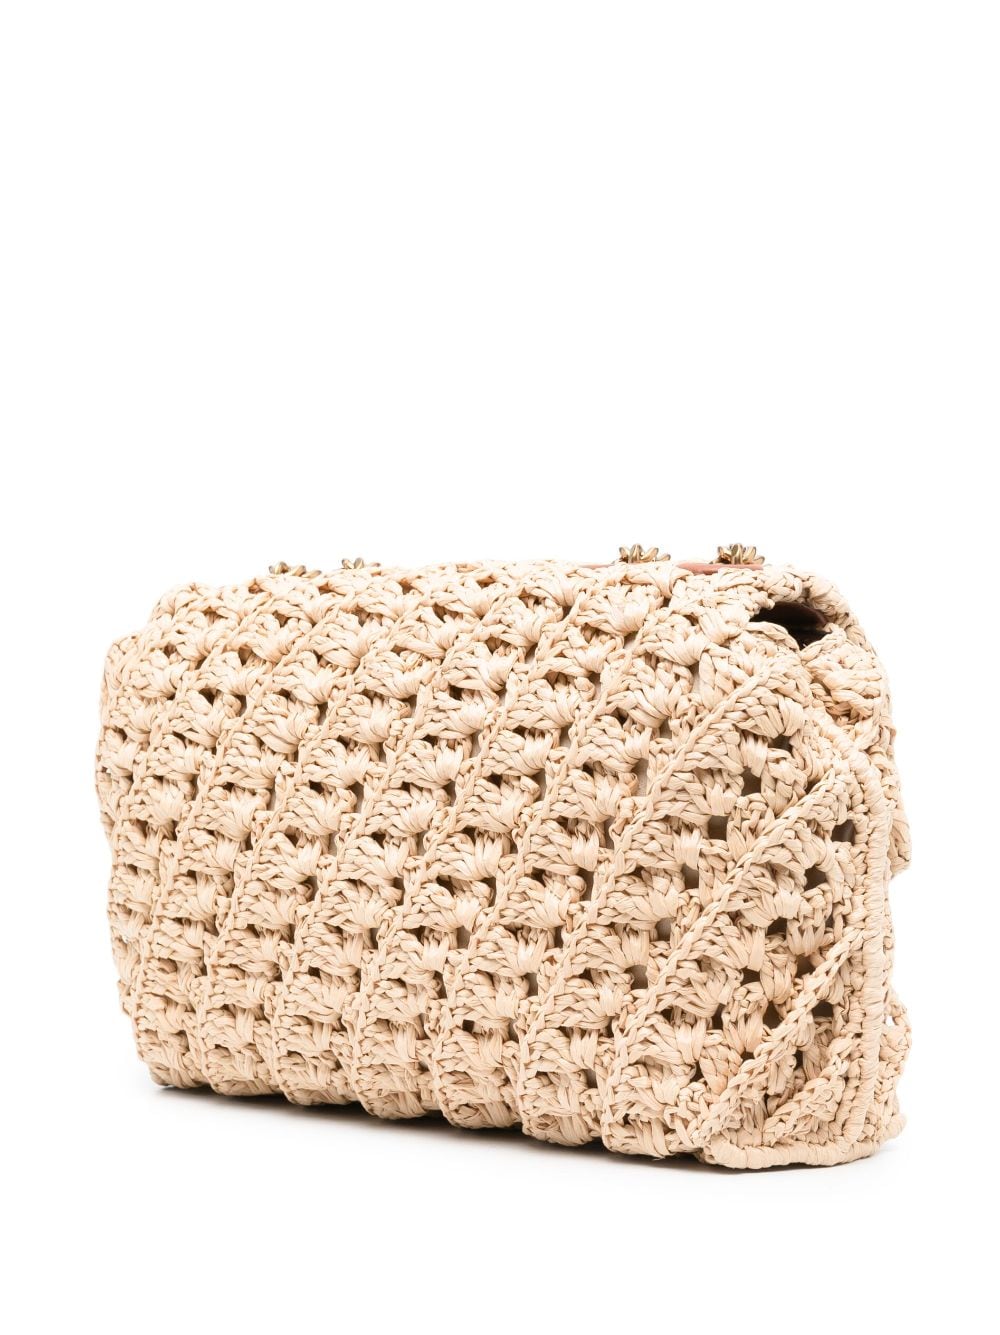 AUTH NWT $498 Tory Burch Women's Kira Crochet Mini Shoulder Bag In